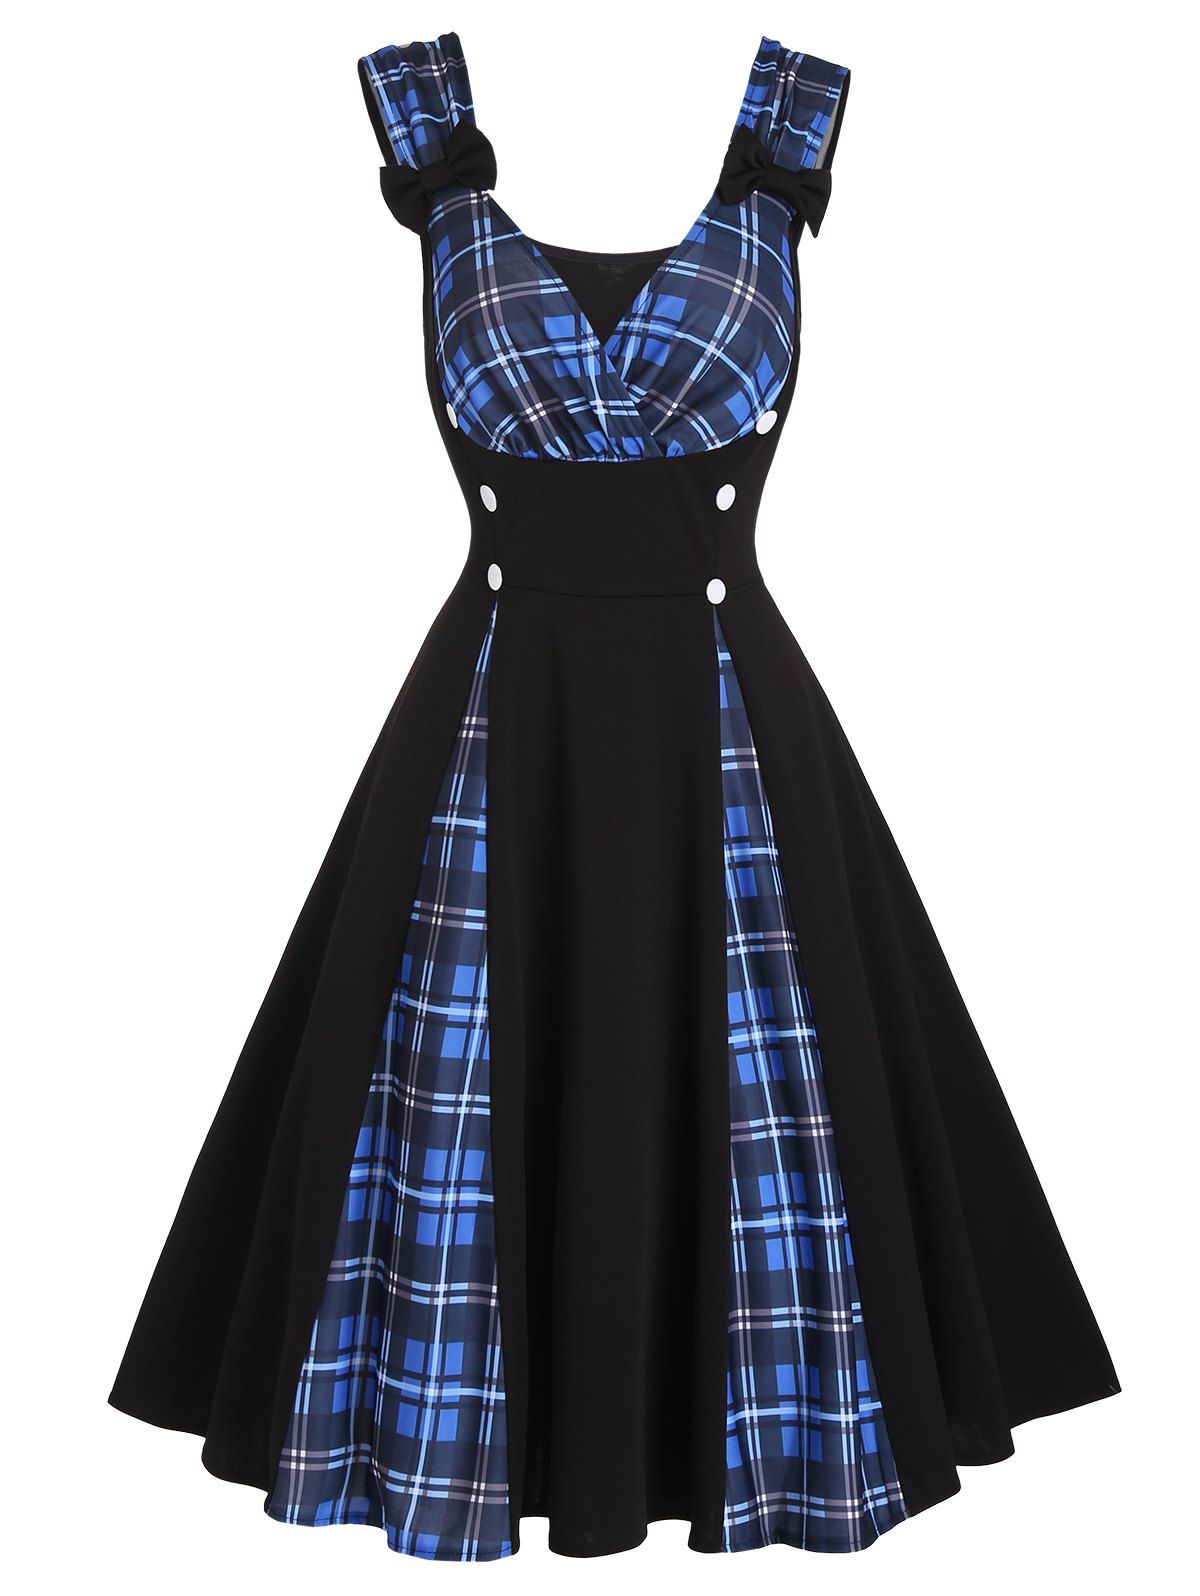 Vintage Dress Plaid Print Dress Bowknot Surplice Mock Button High Waist A Line Mini Dress - BLUE XL